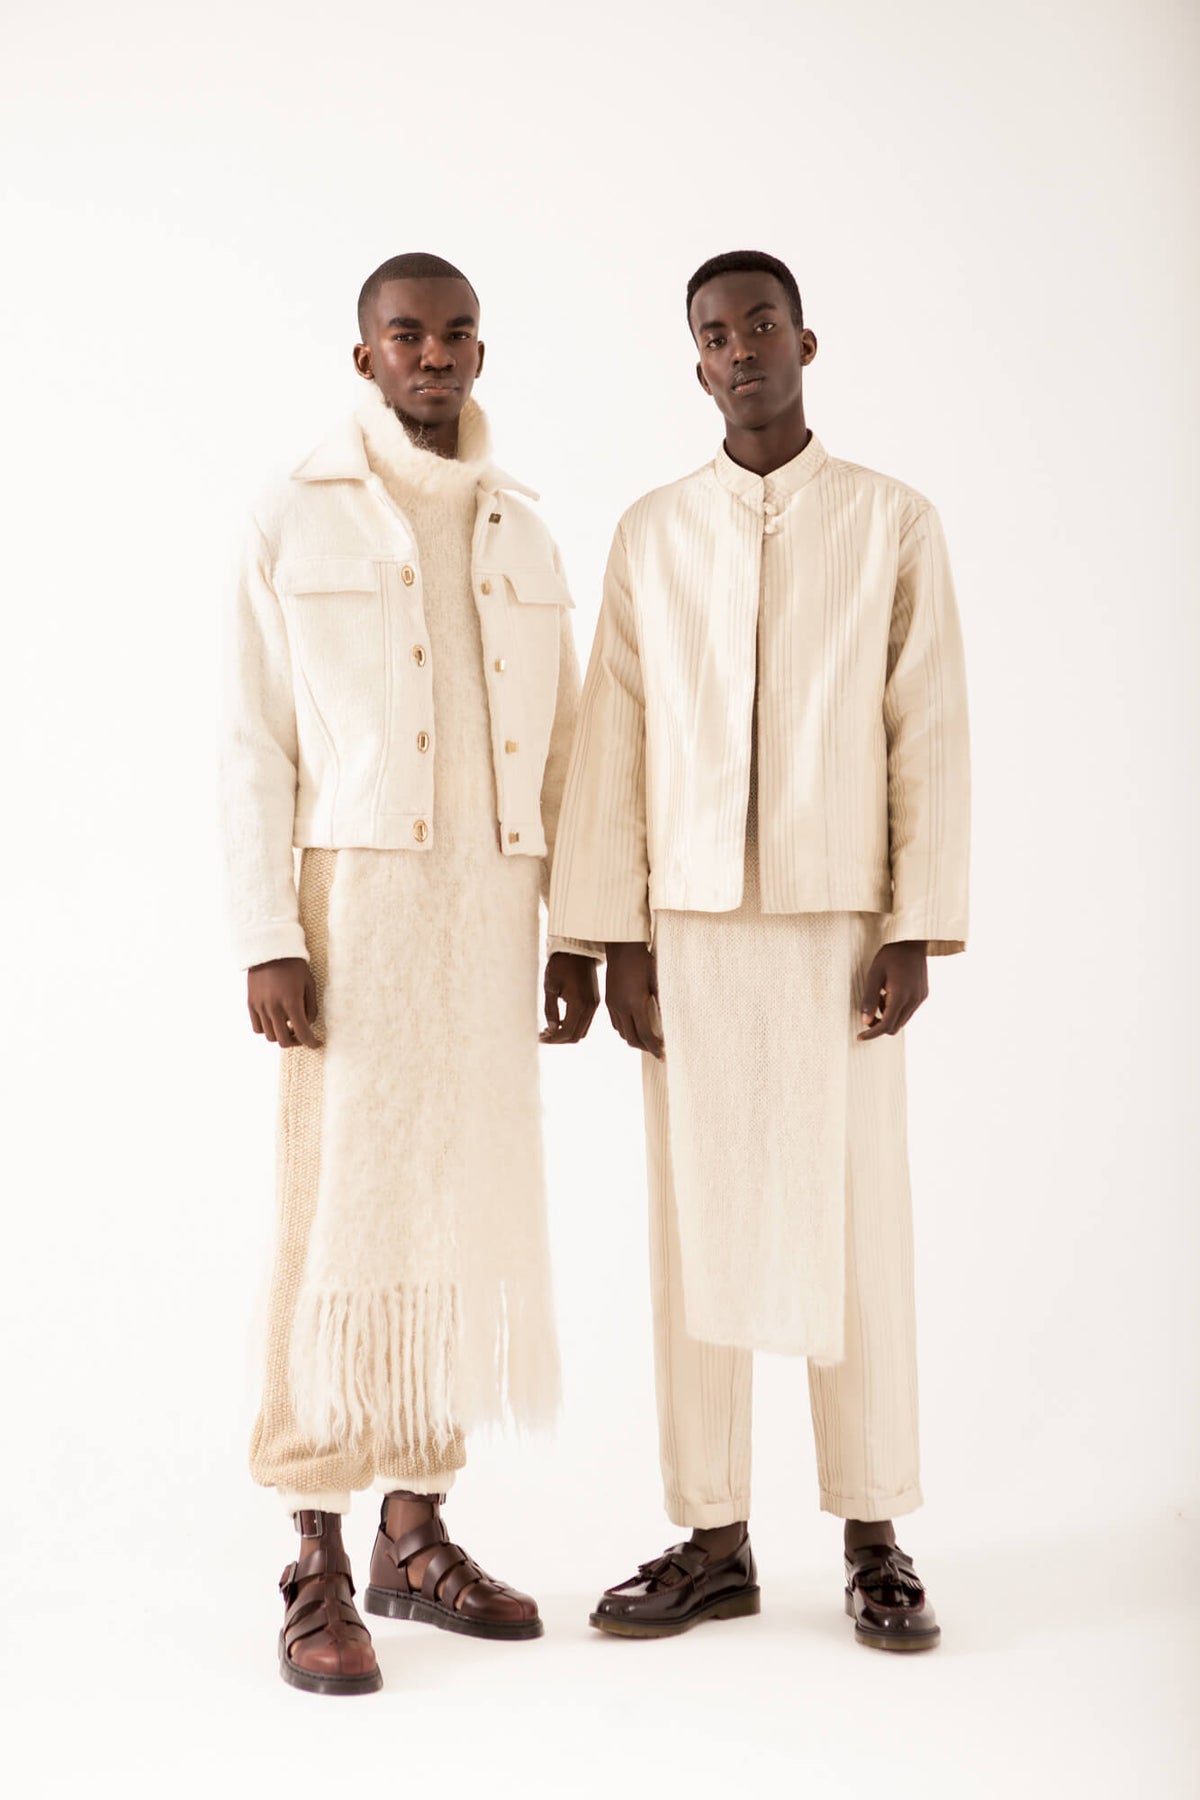 SA designer Lukhanyo Mdingi wins prestigious Karl Lagerfeld LVMH Prize